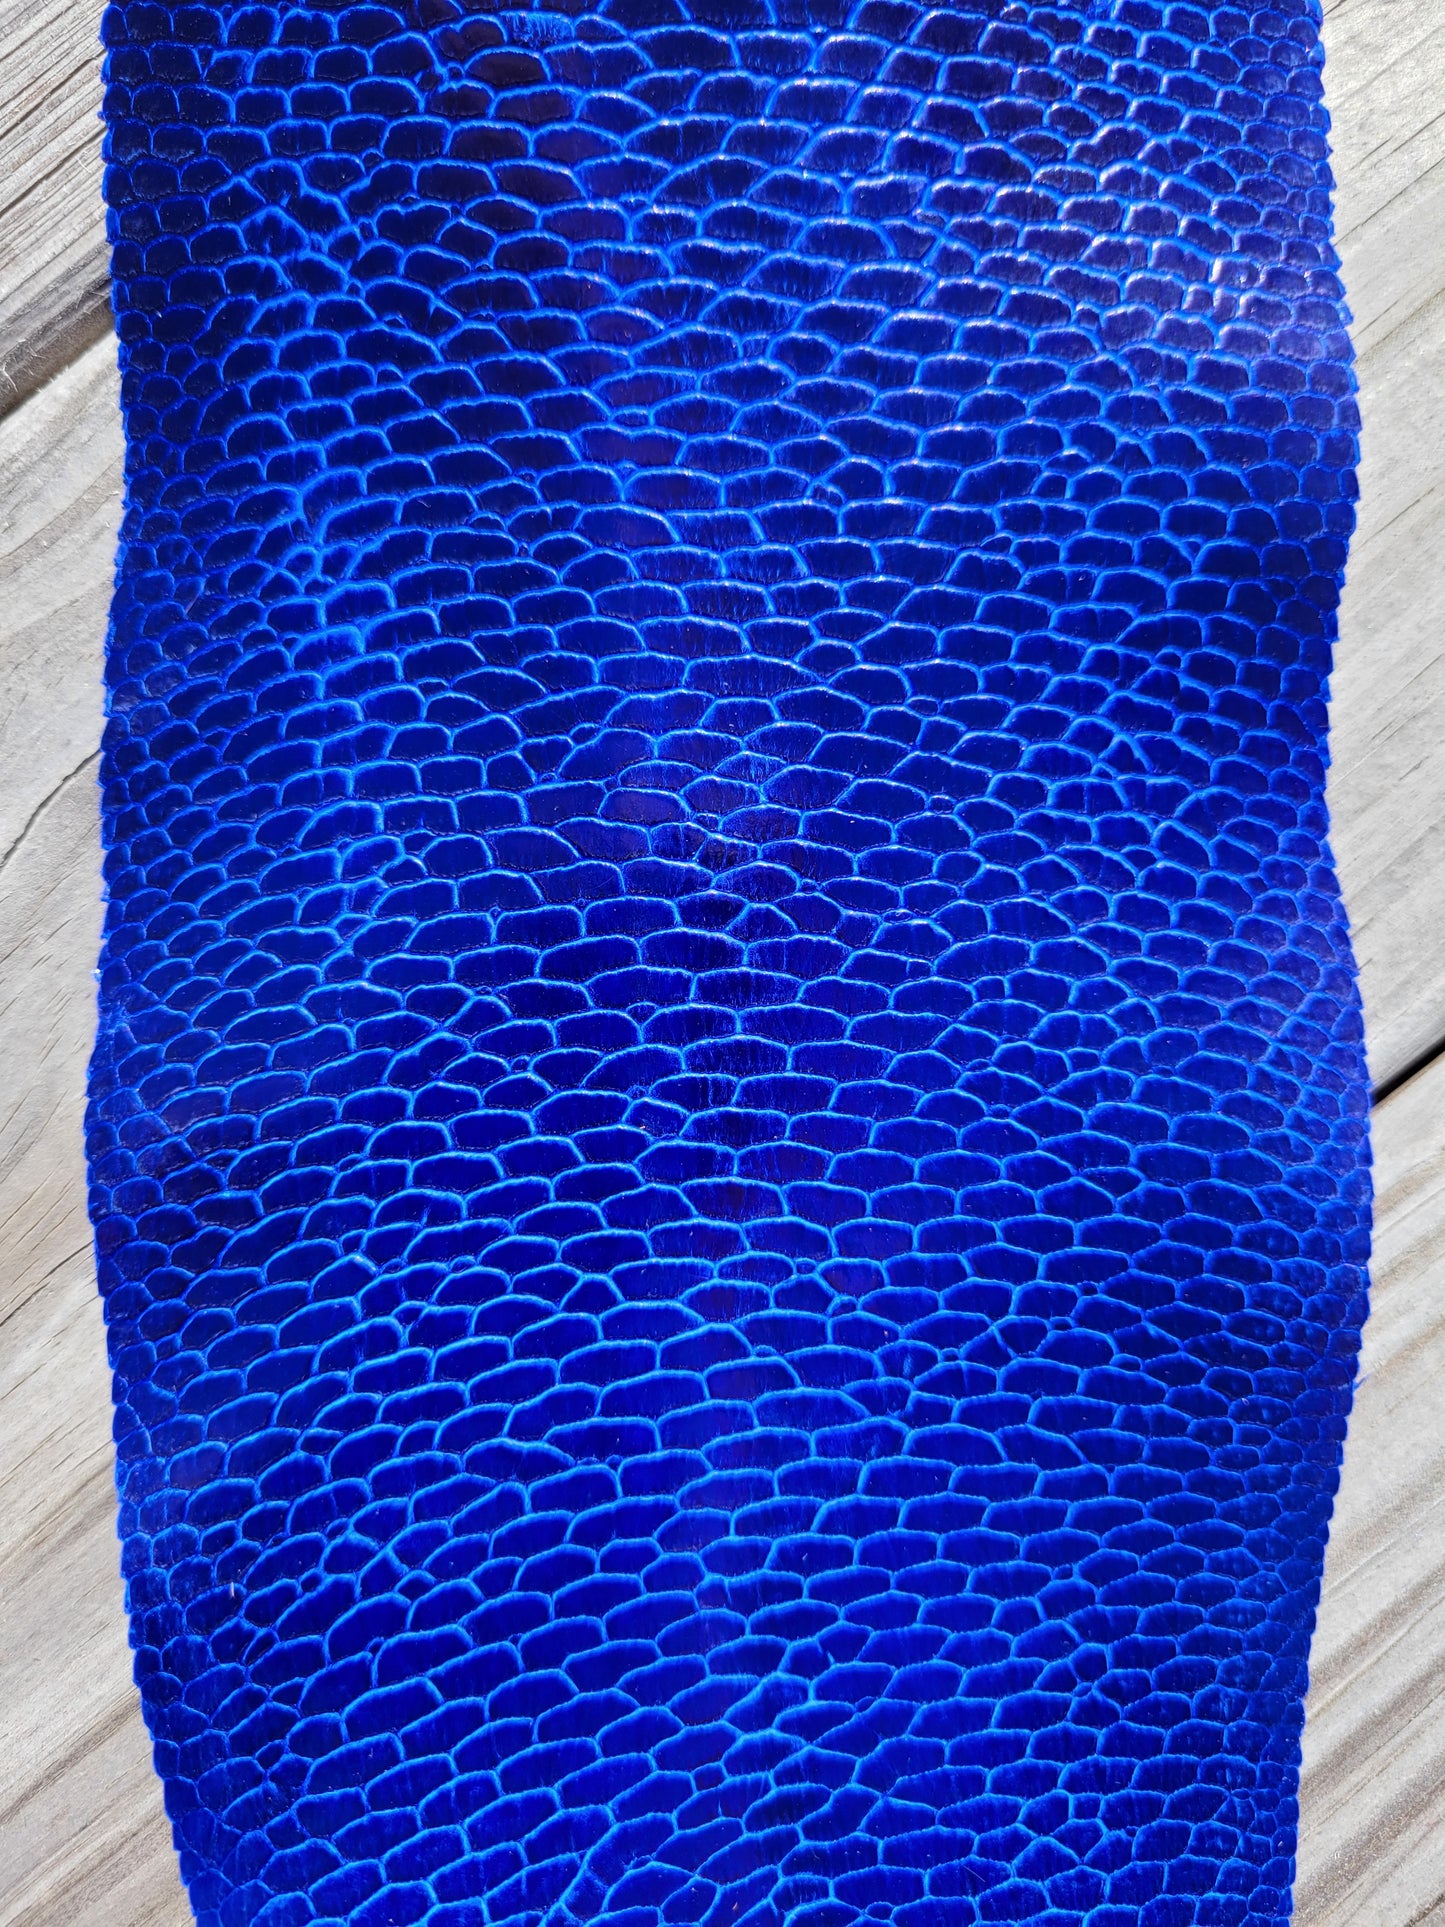 Beaver Tail - Electric Blue (Glazed)